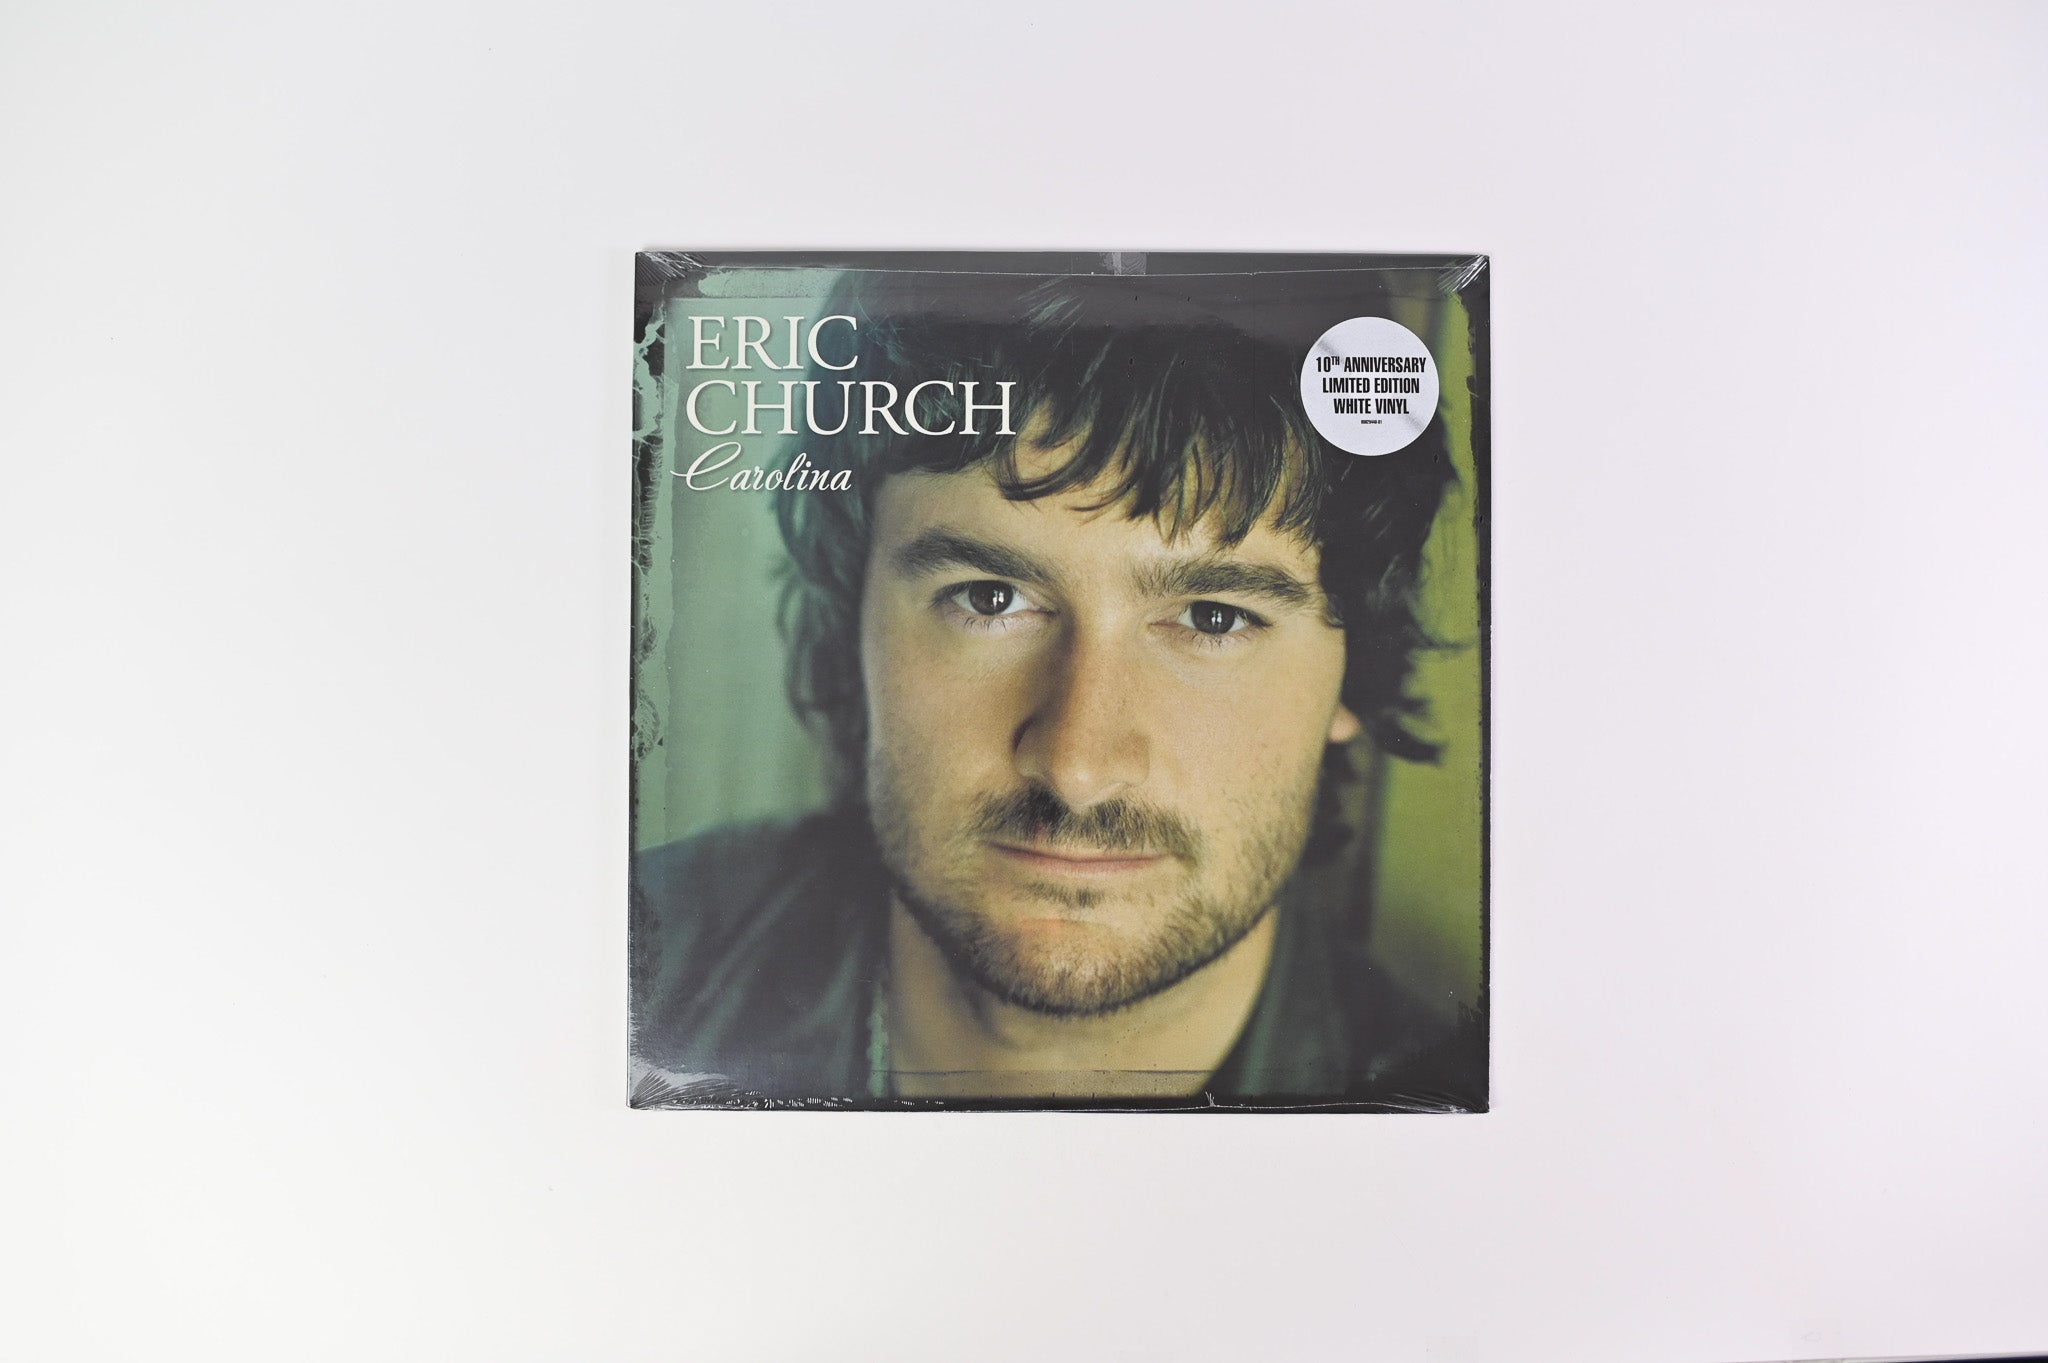 Eric Church - Carolina on EMI Nashville 10th Anniversary Ltd White Vinyl Reissue Sealed